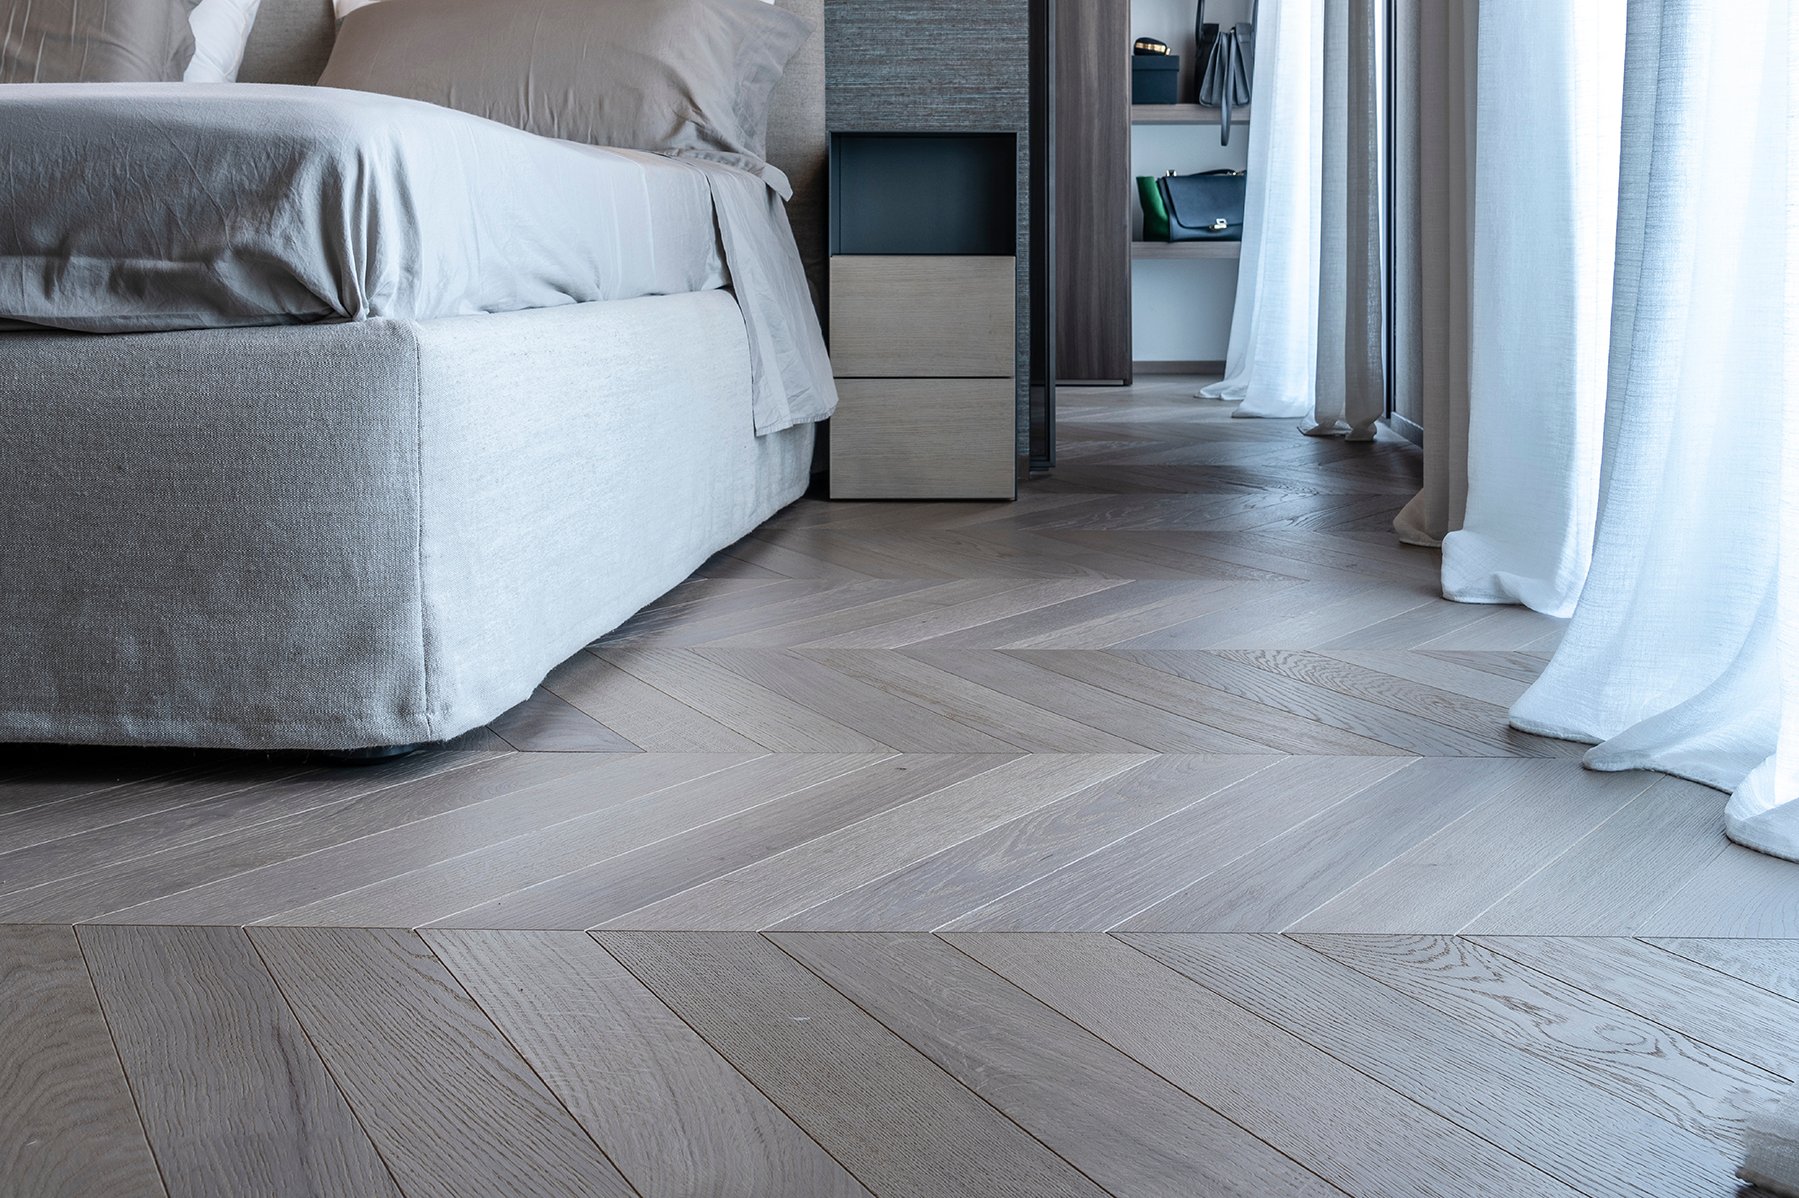  Blanc Chantilly flooring, featuring select grade European oak hardwood